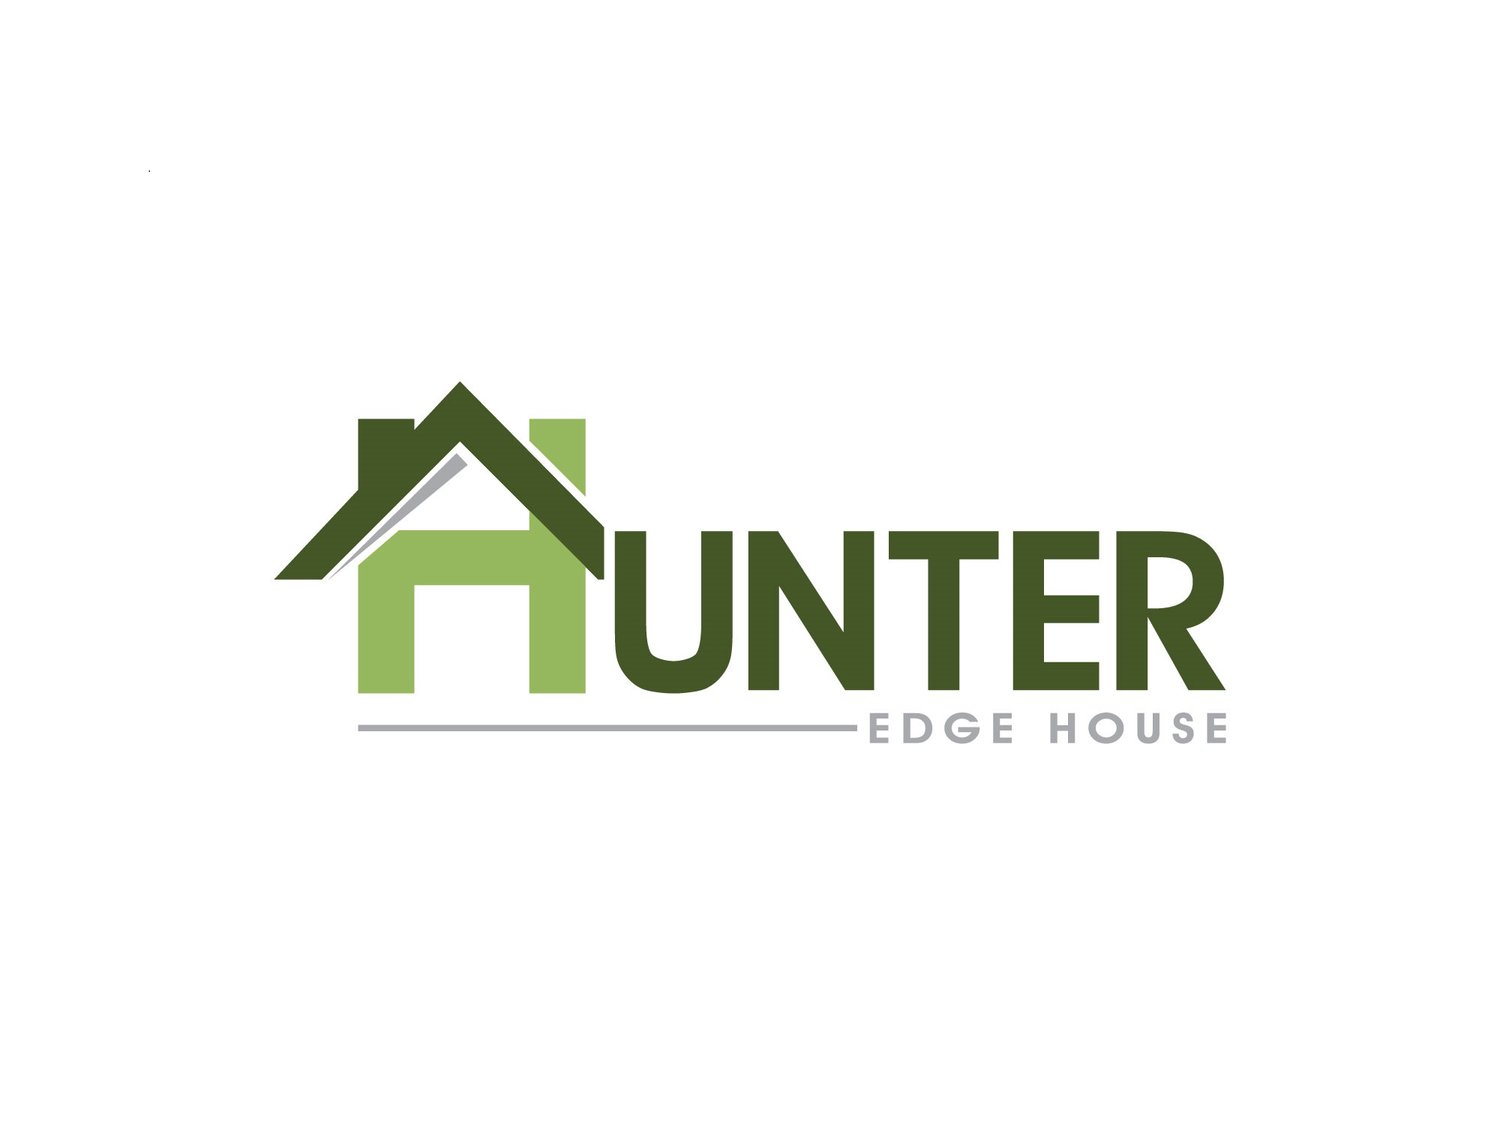 Hunter Edge House